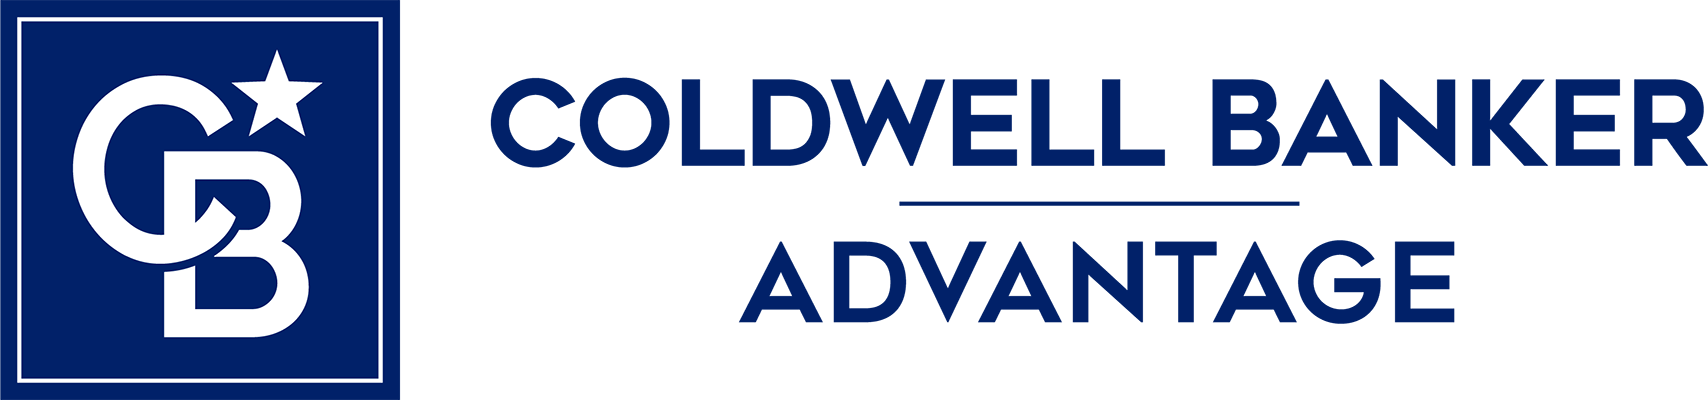 Bayo Ojo - Coldwell Banker Advantage Logo